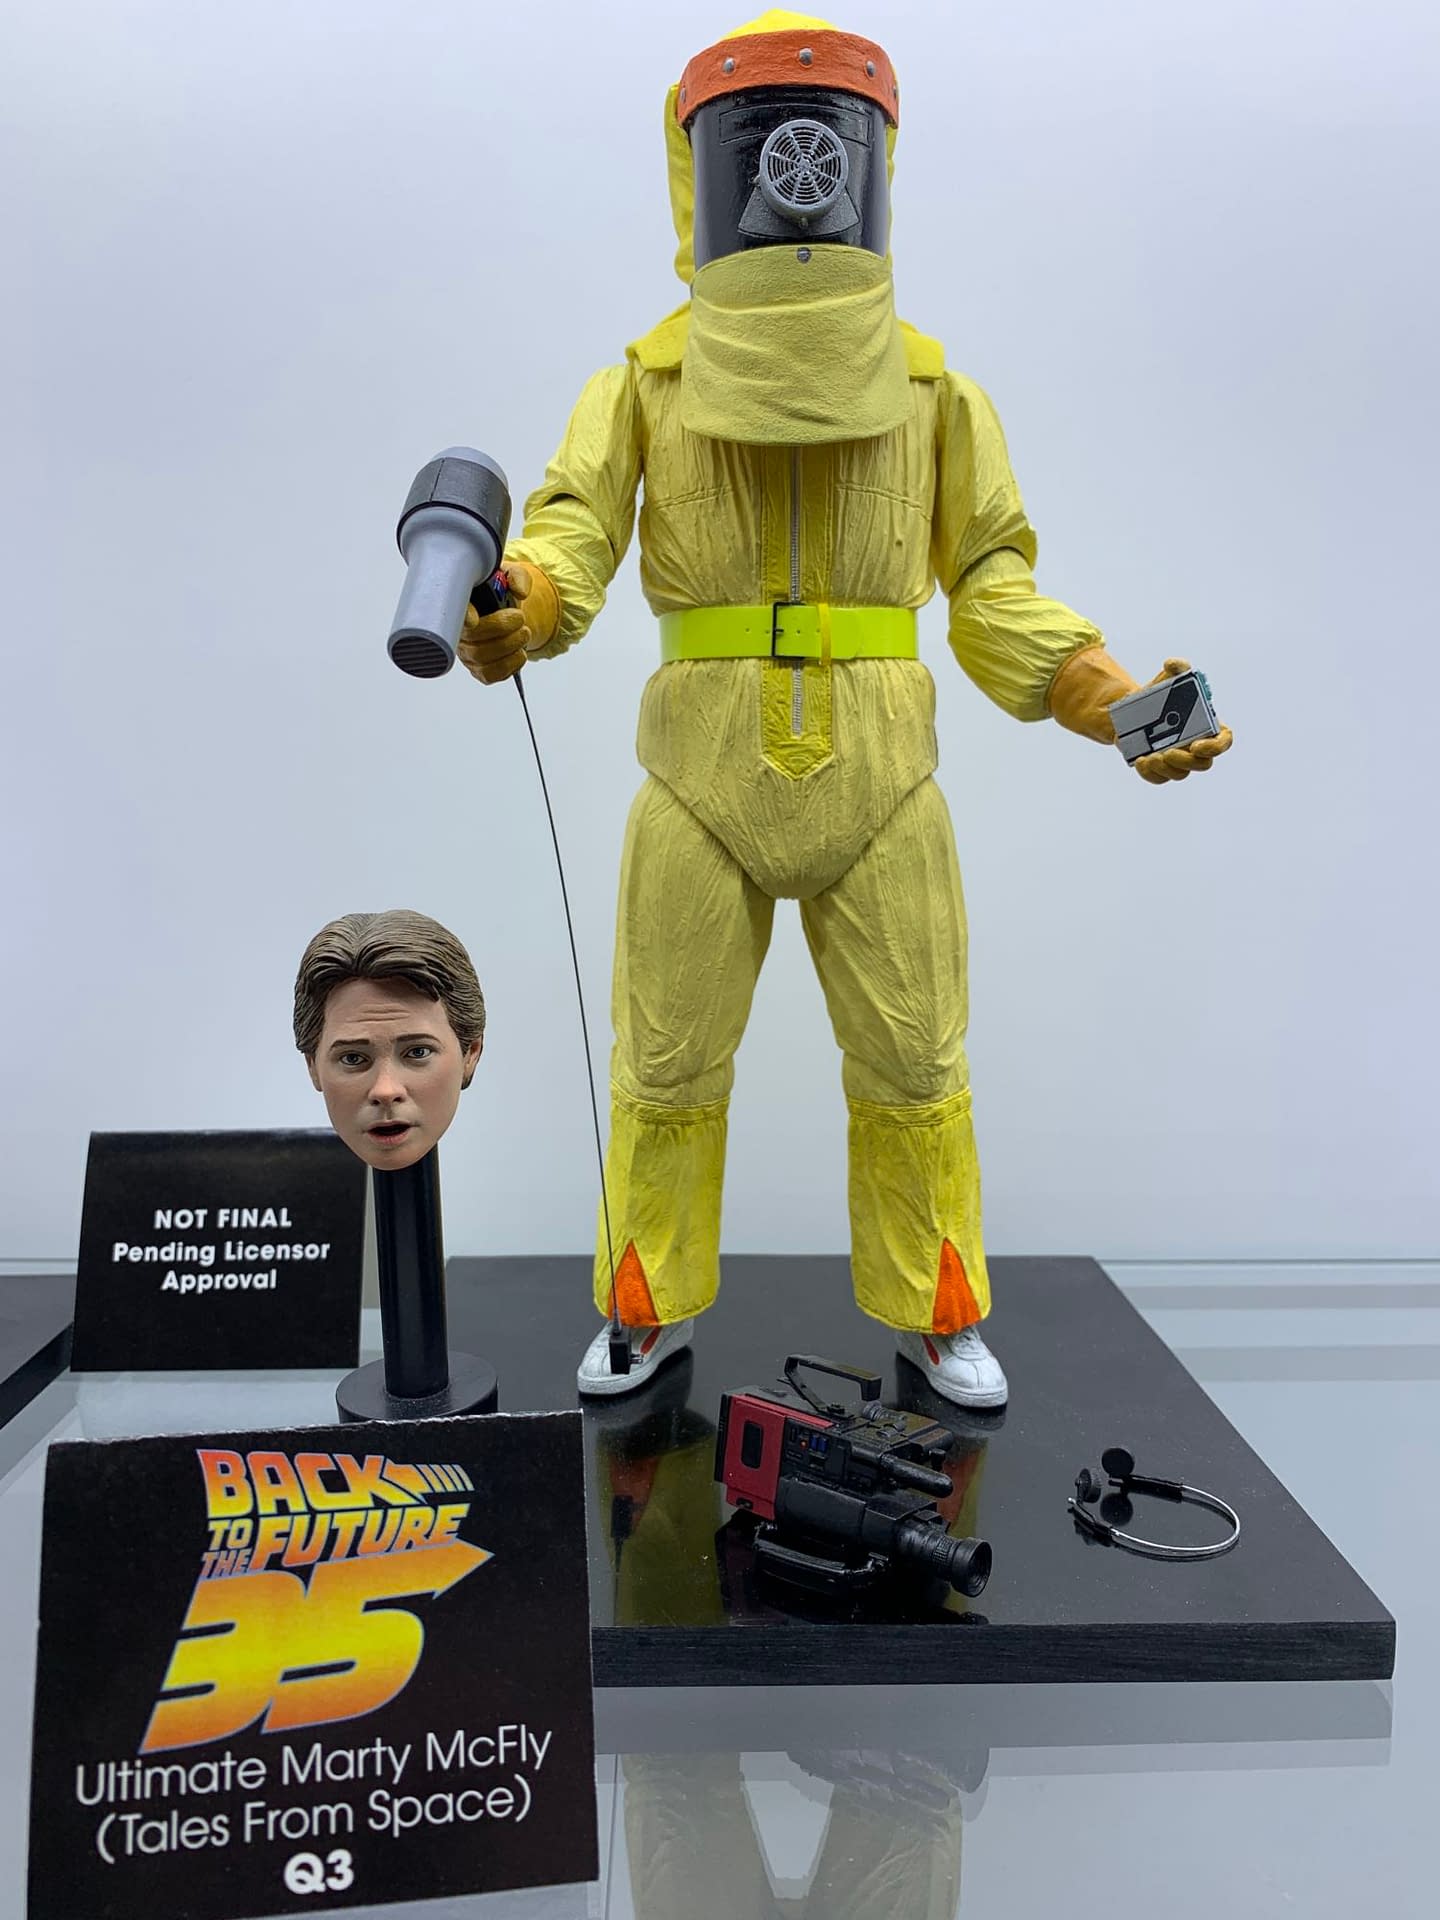 NECA New York Toy Fair 2020: TMNT and Horror Figures 